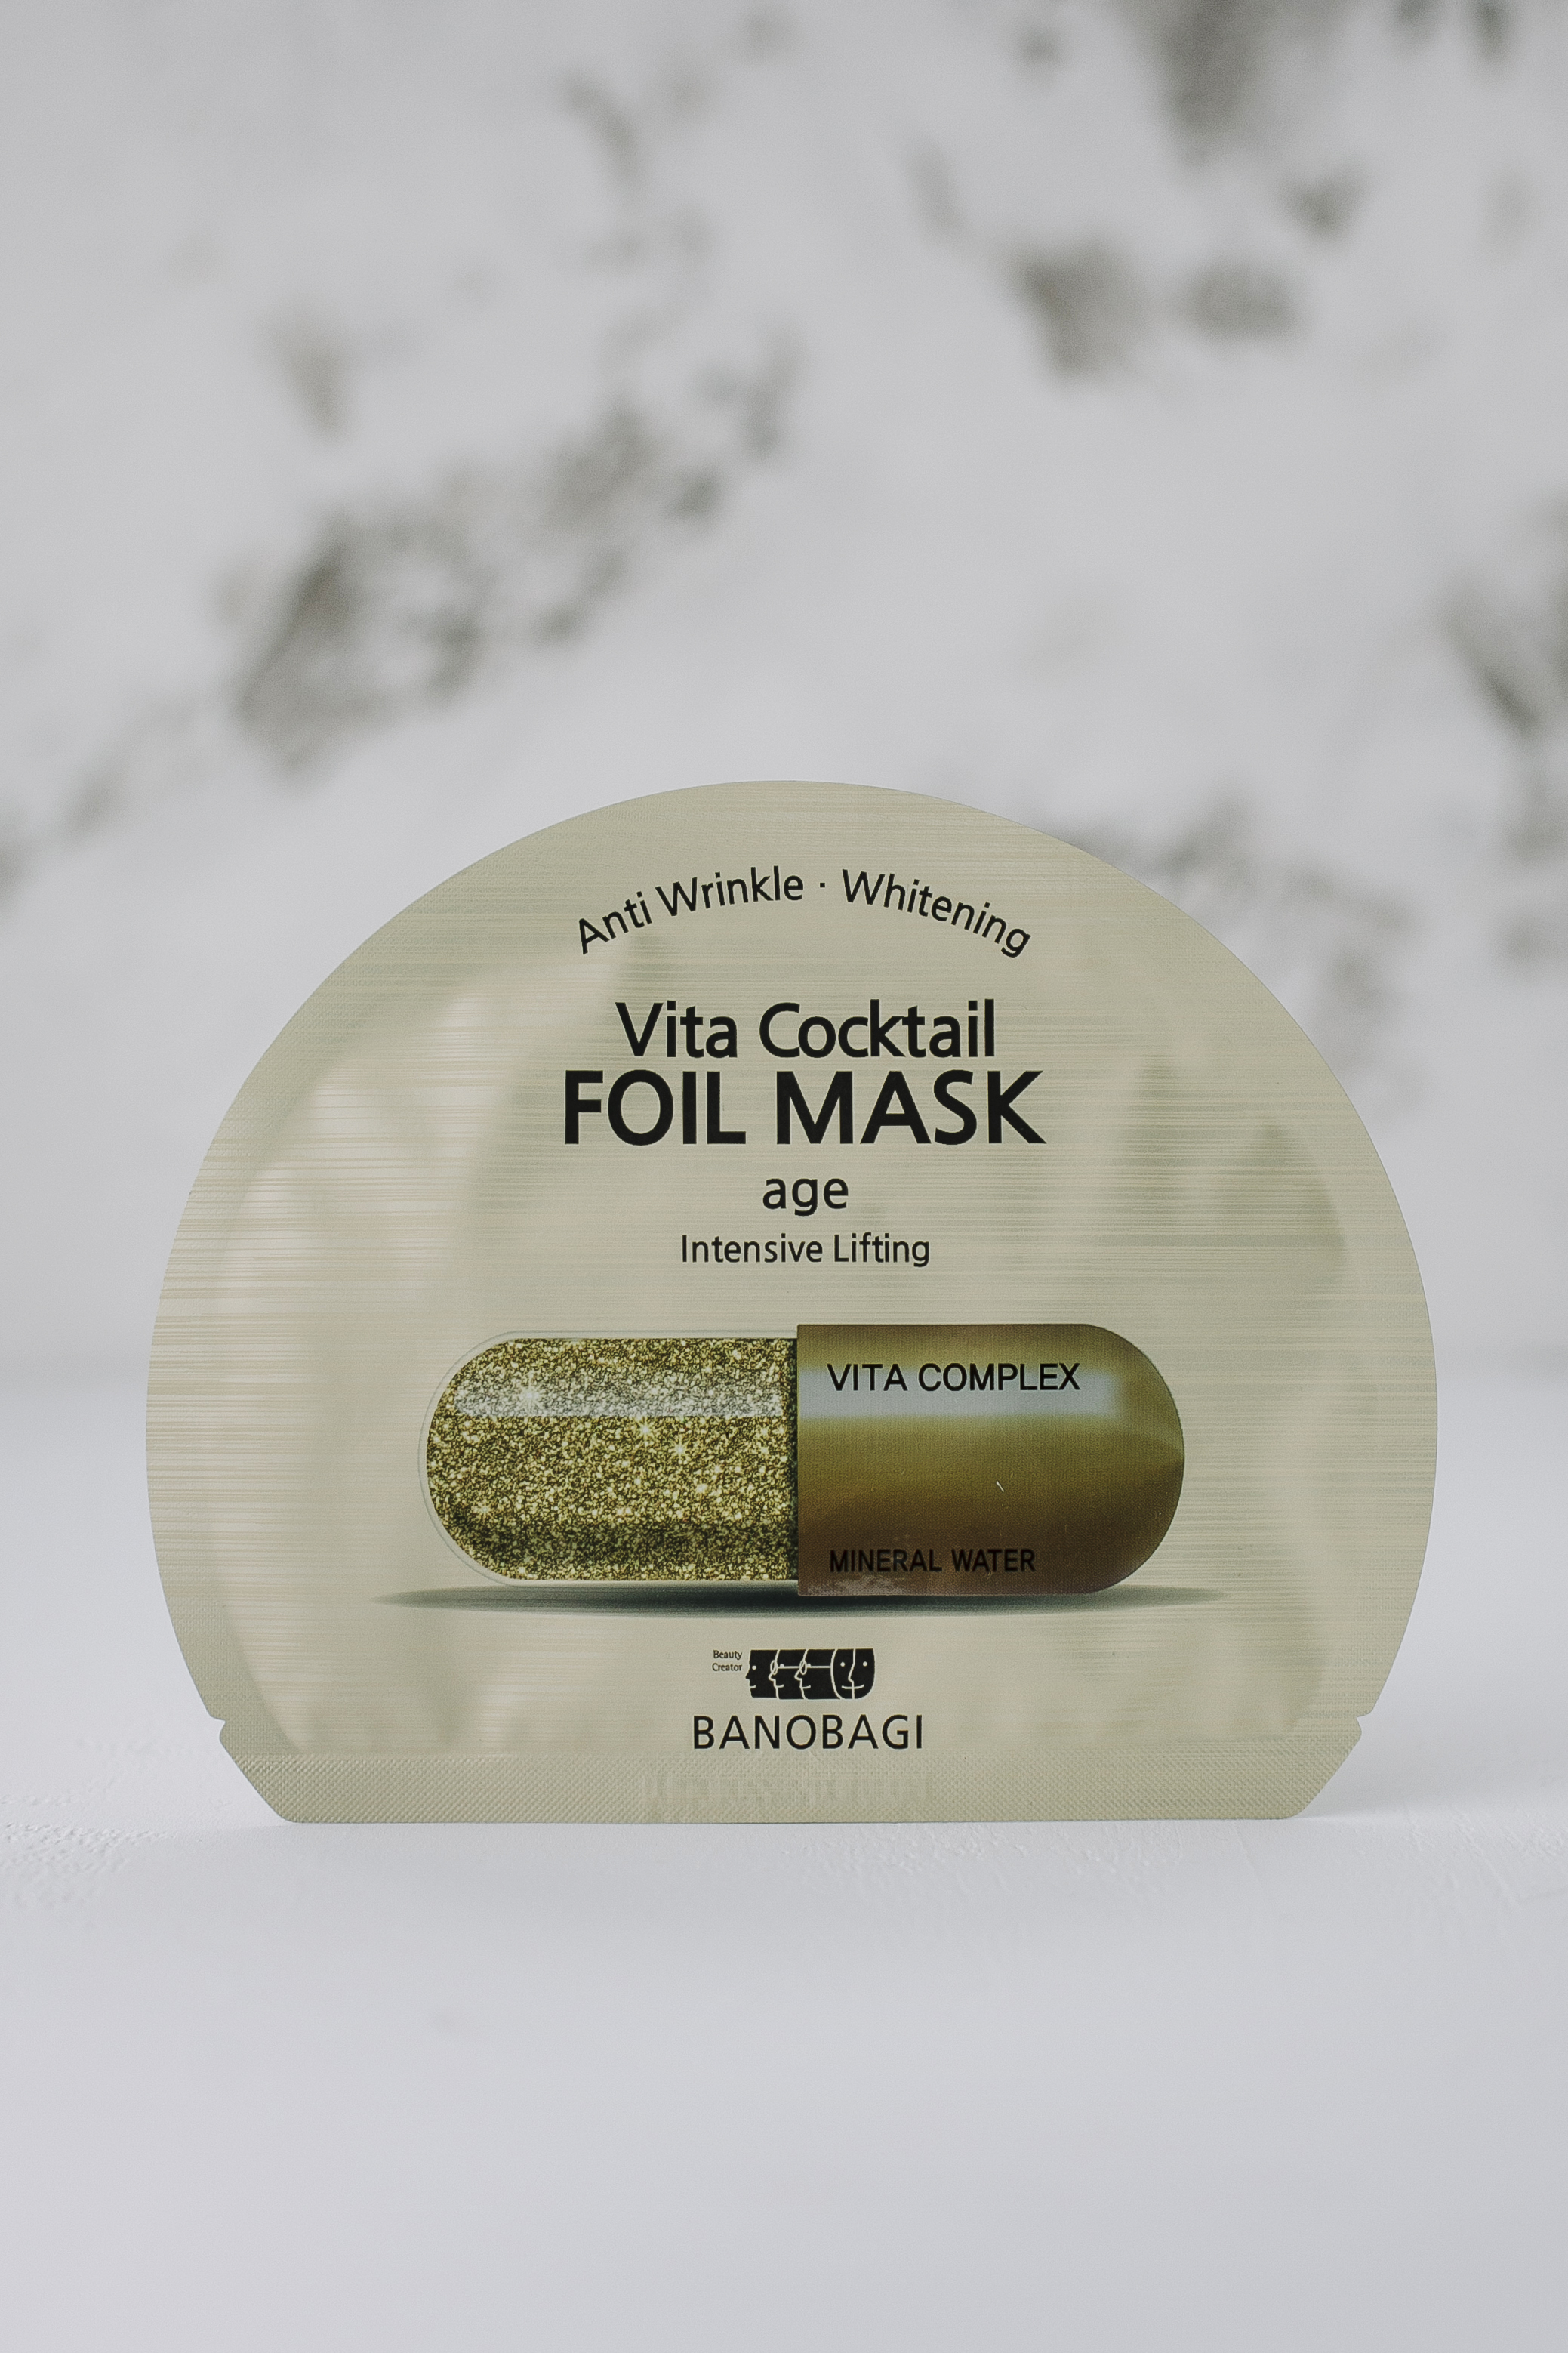 BANOBAGI Vita Cocktail Age Foil Mask 30ml